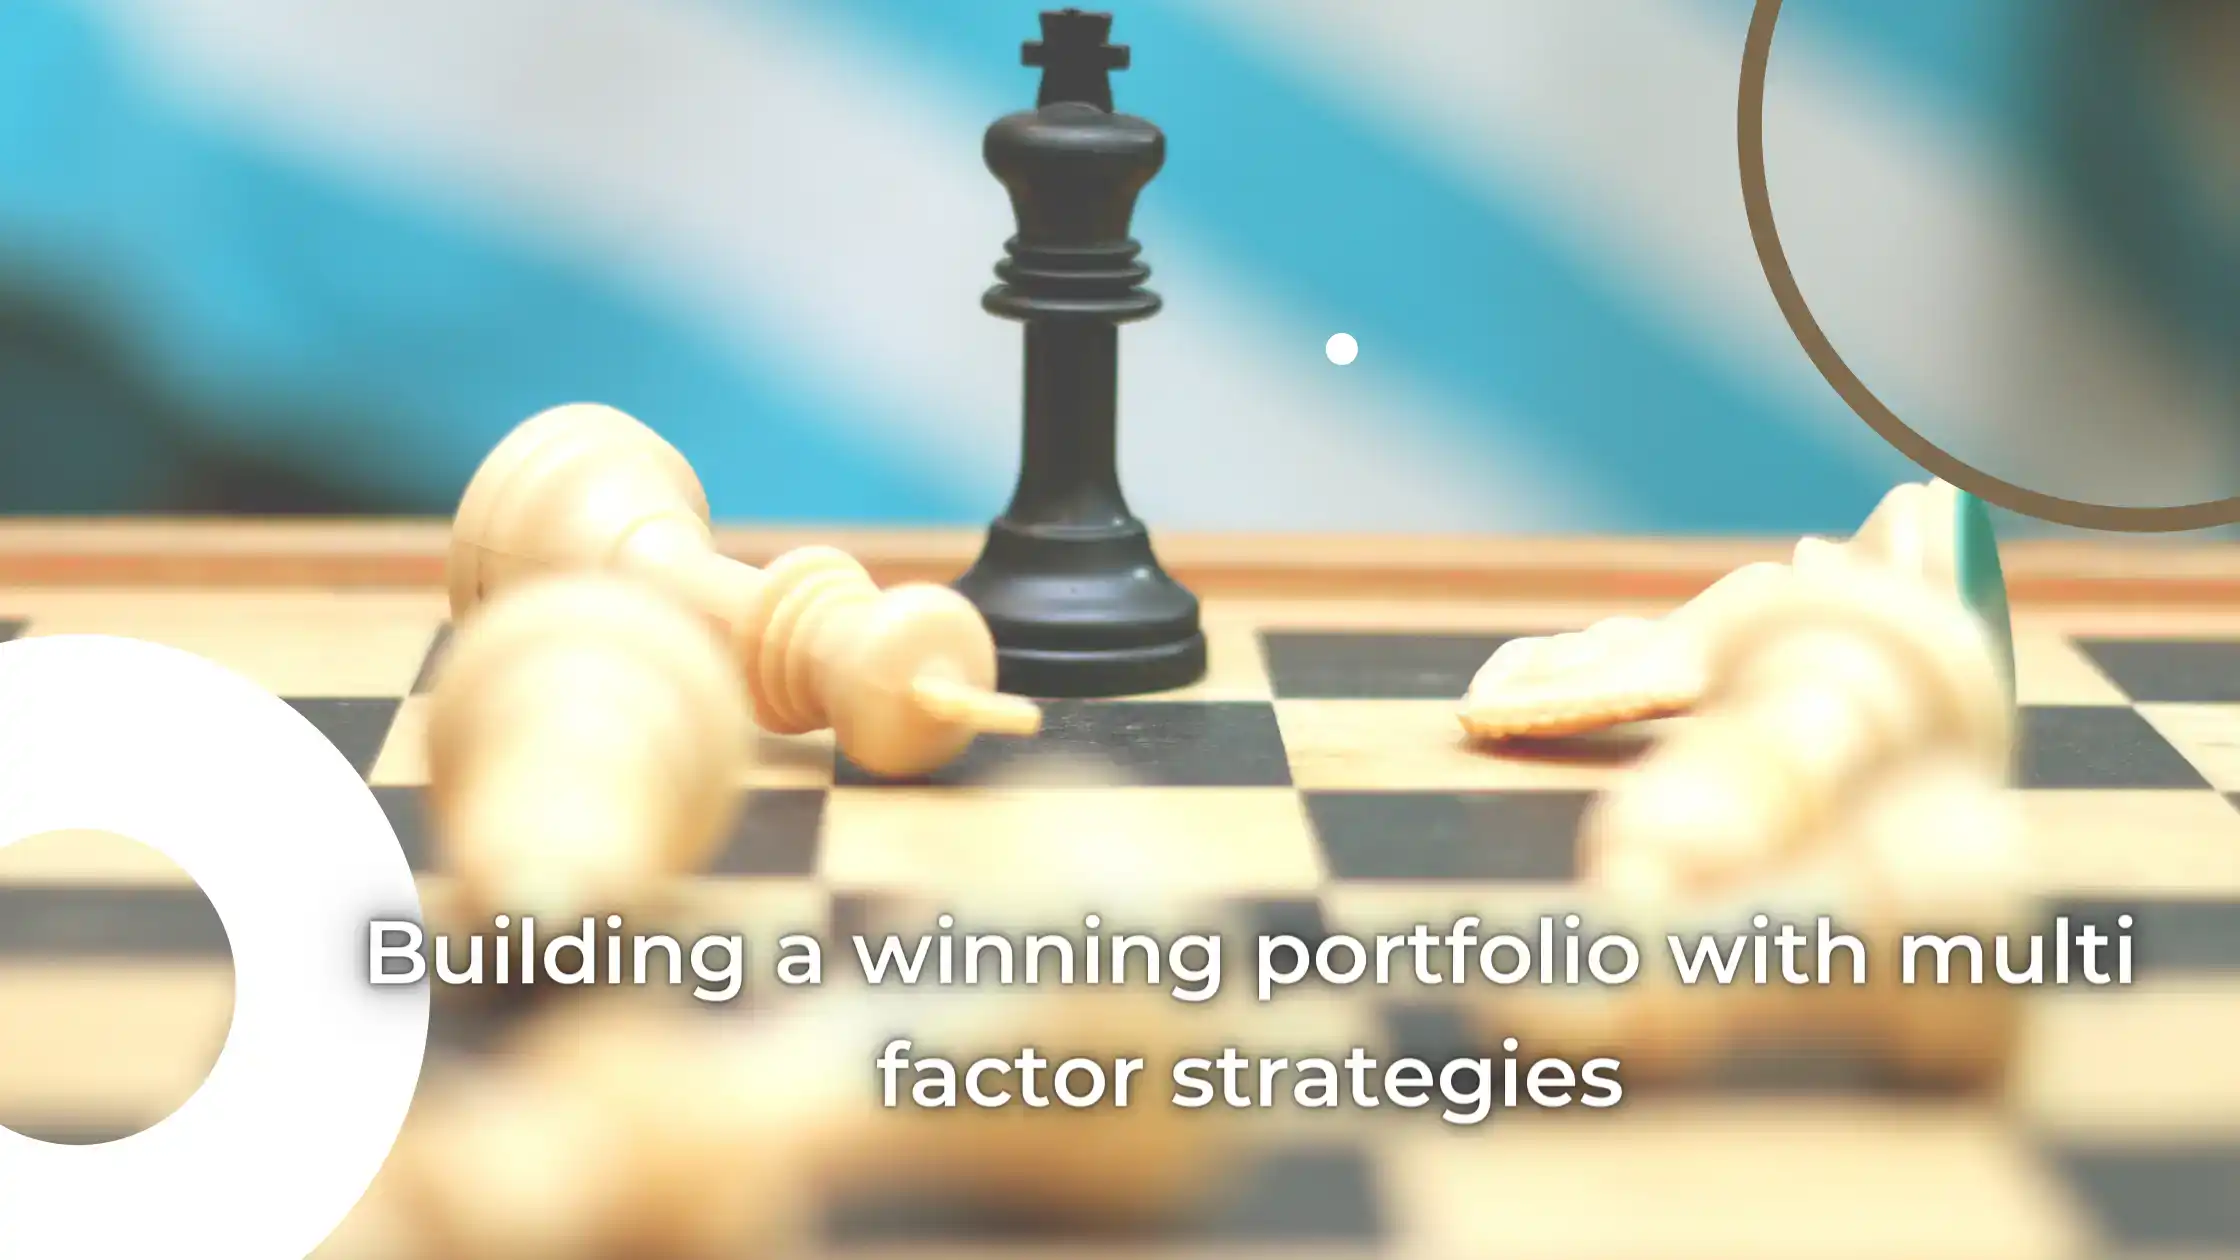 Building a winning portfolio with multi factor strategies